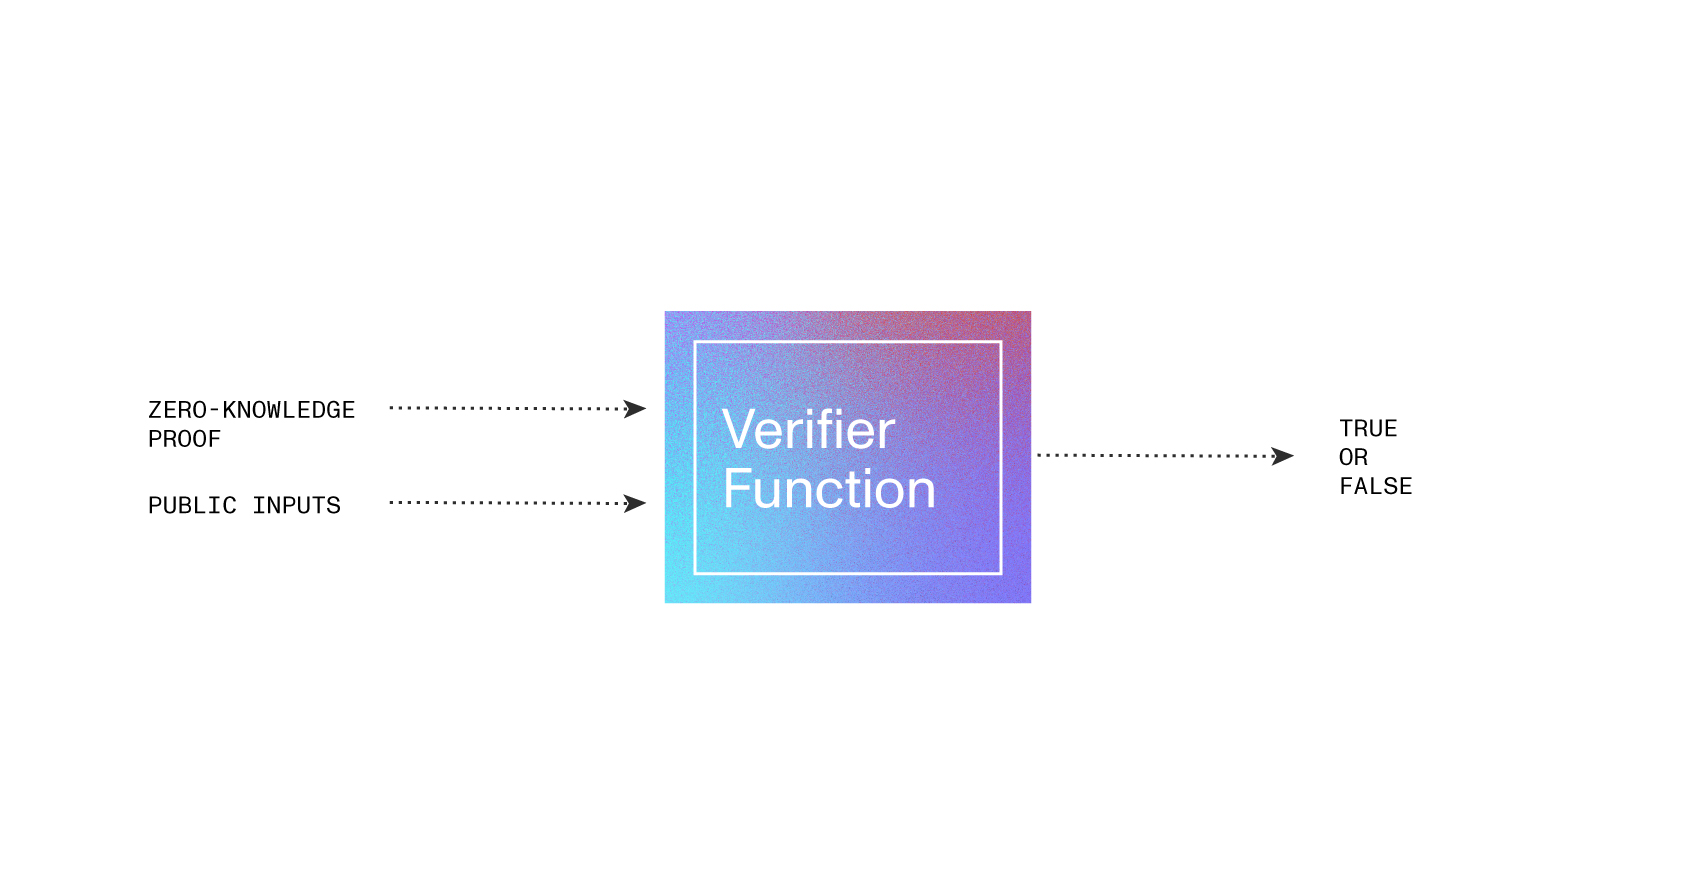 Diagram showing verifier function validation